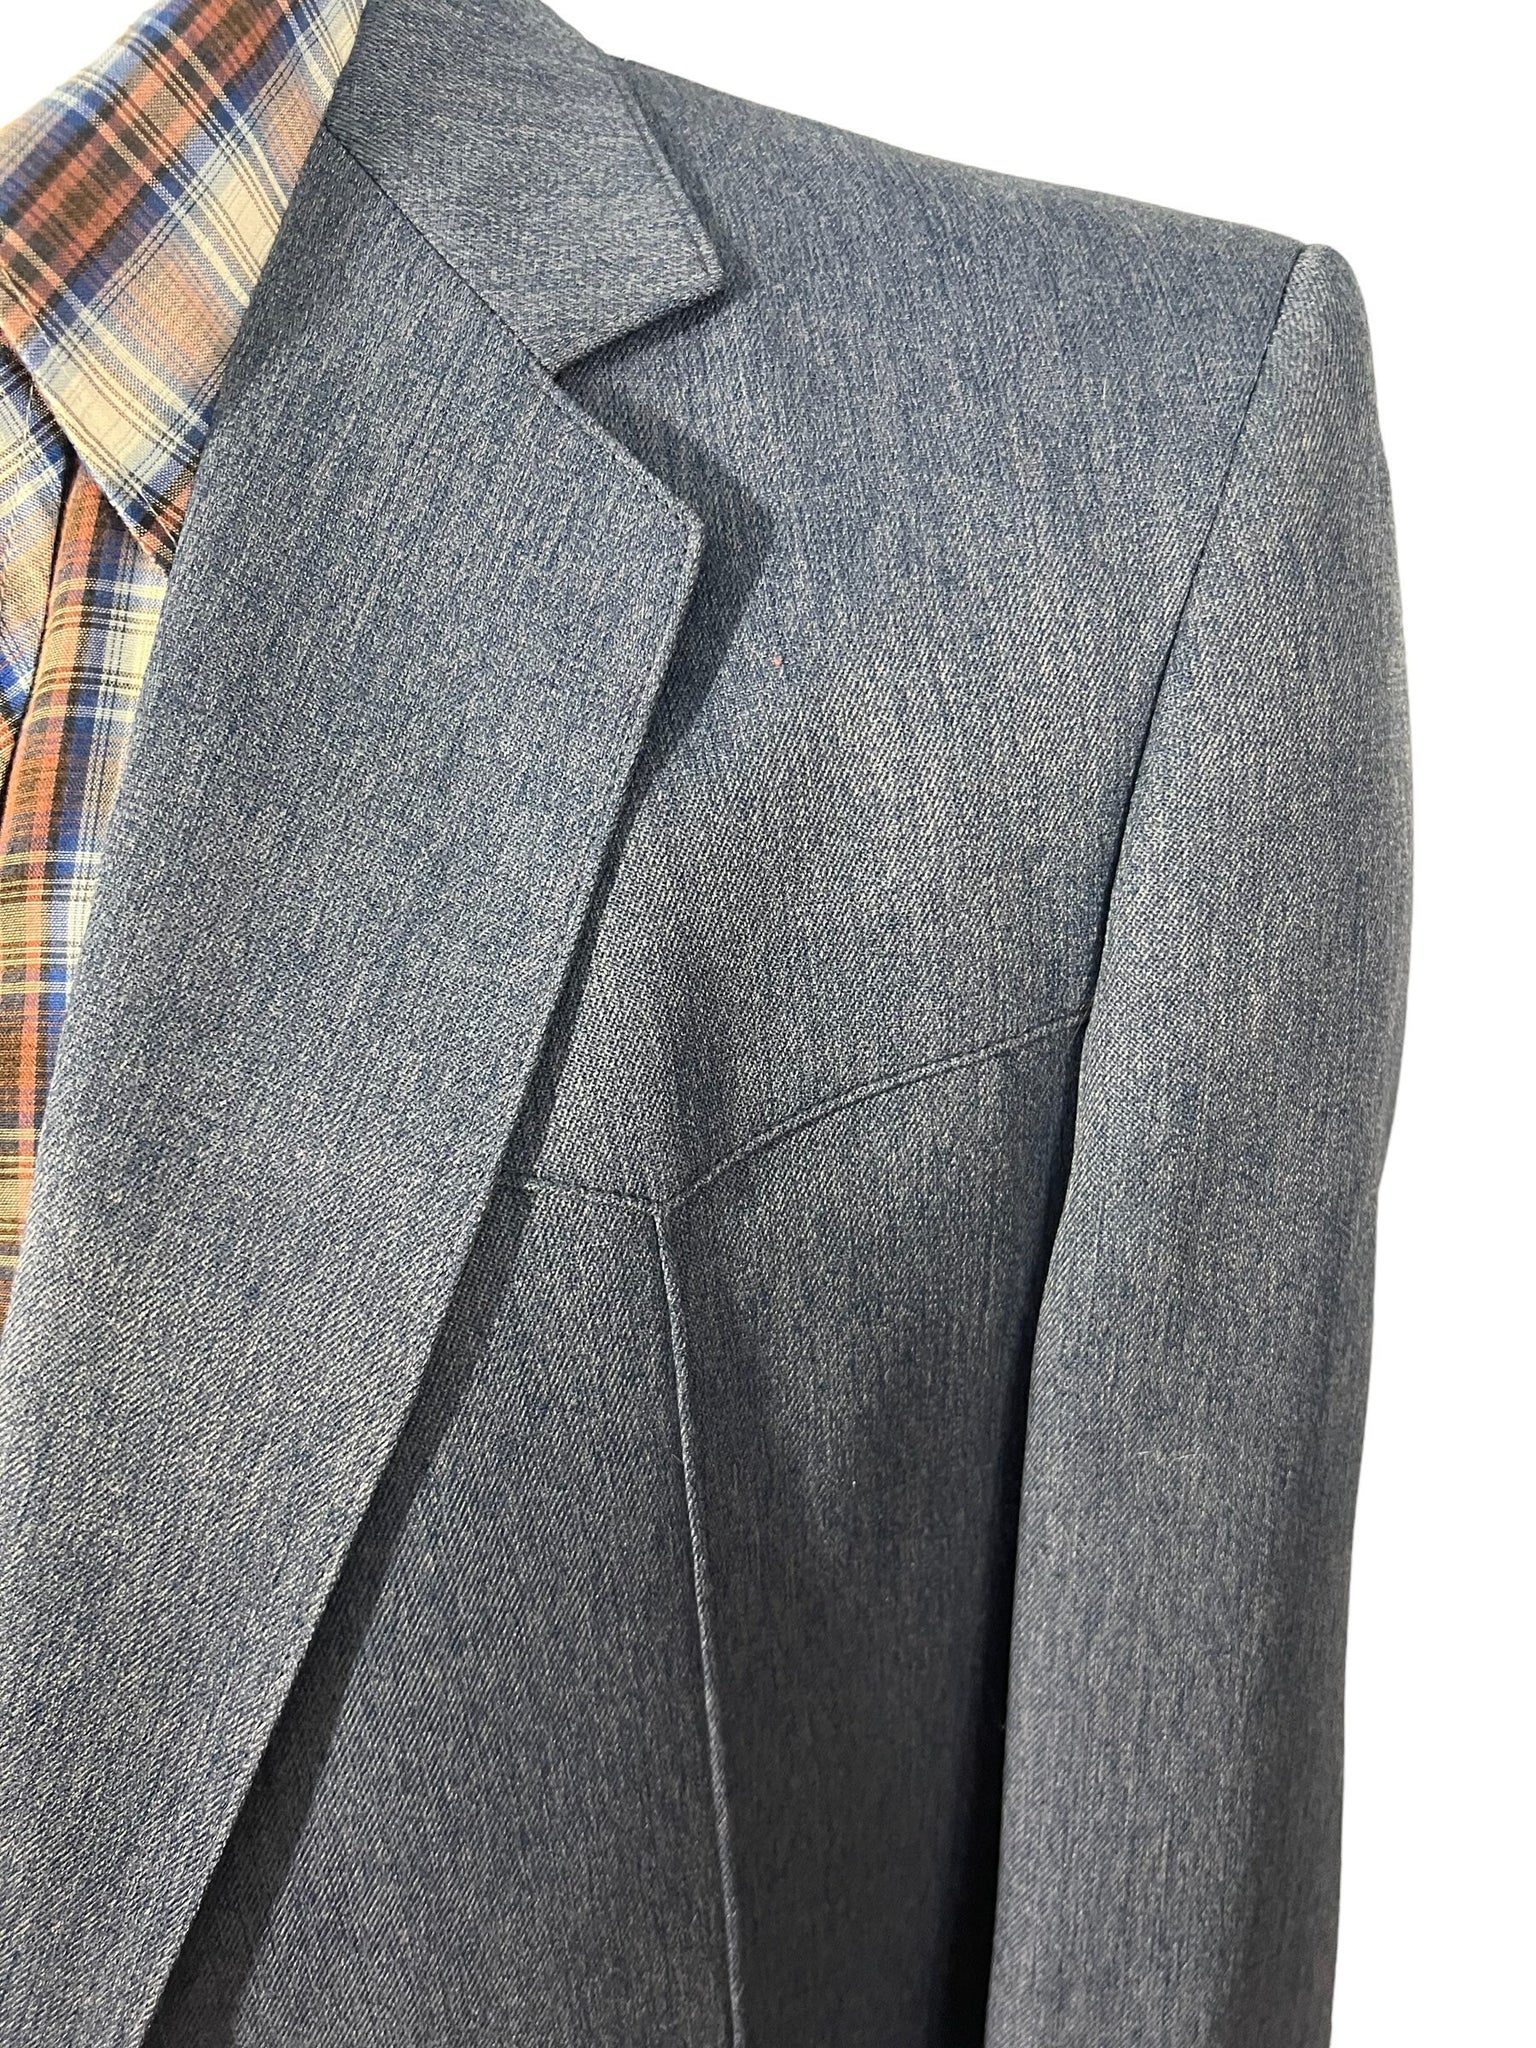 Vintage 70's blue western suit jacket 44